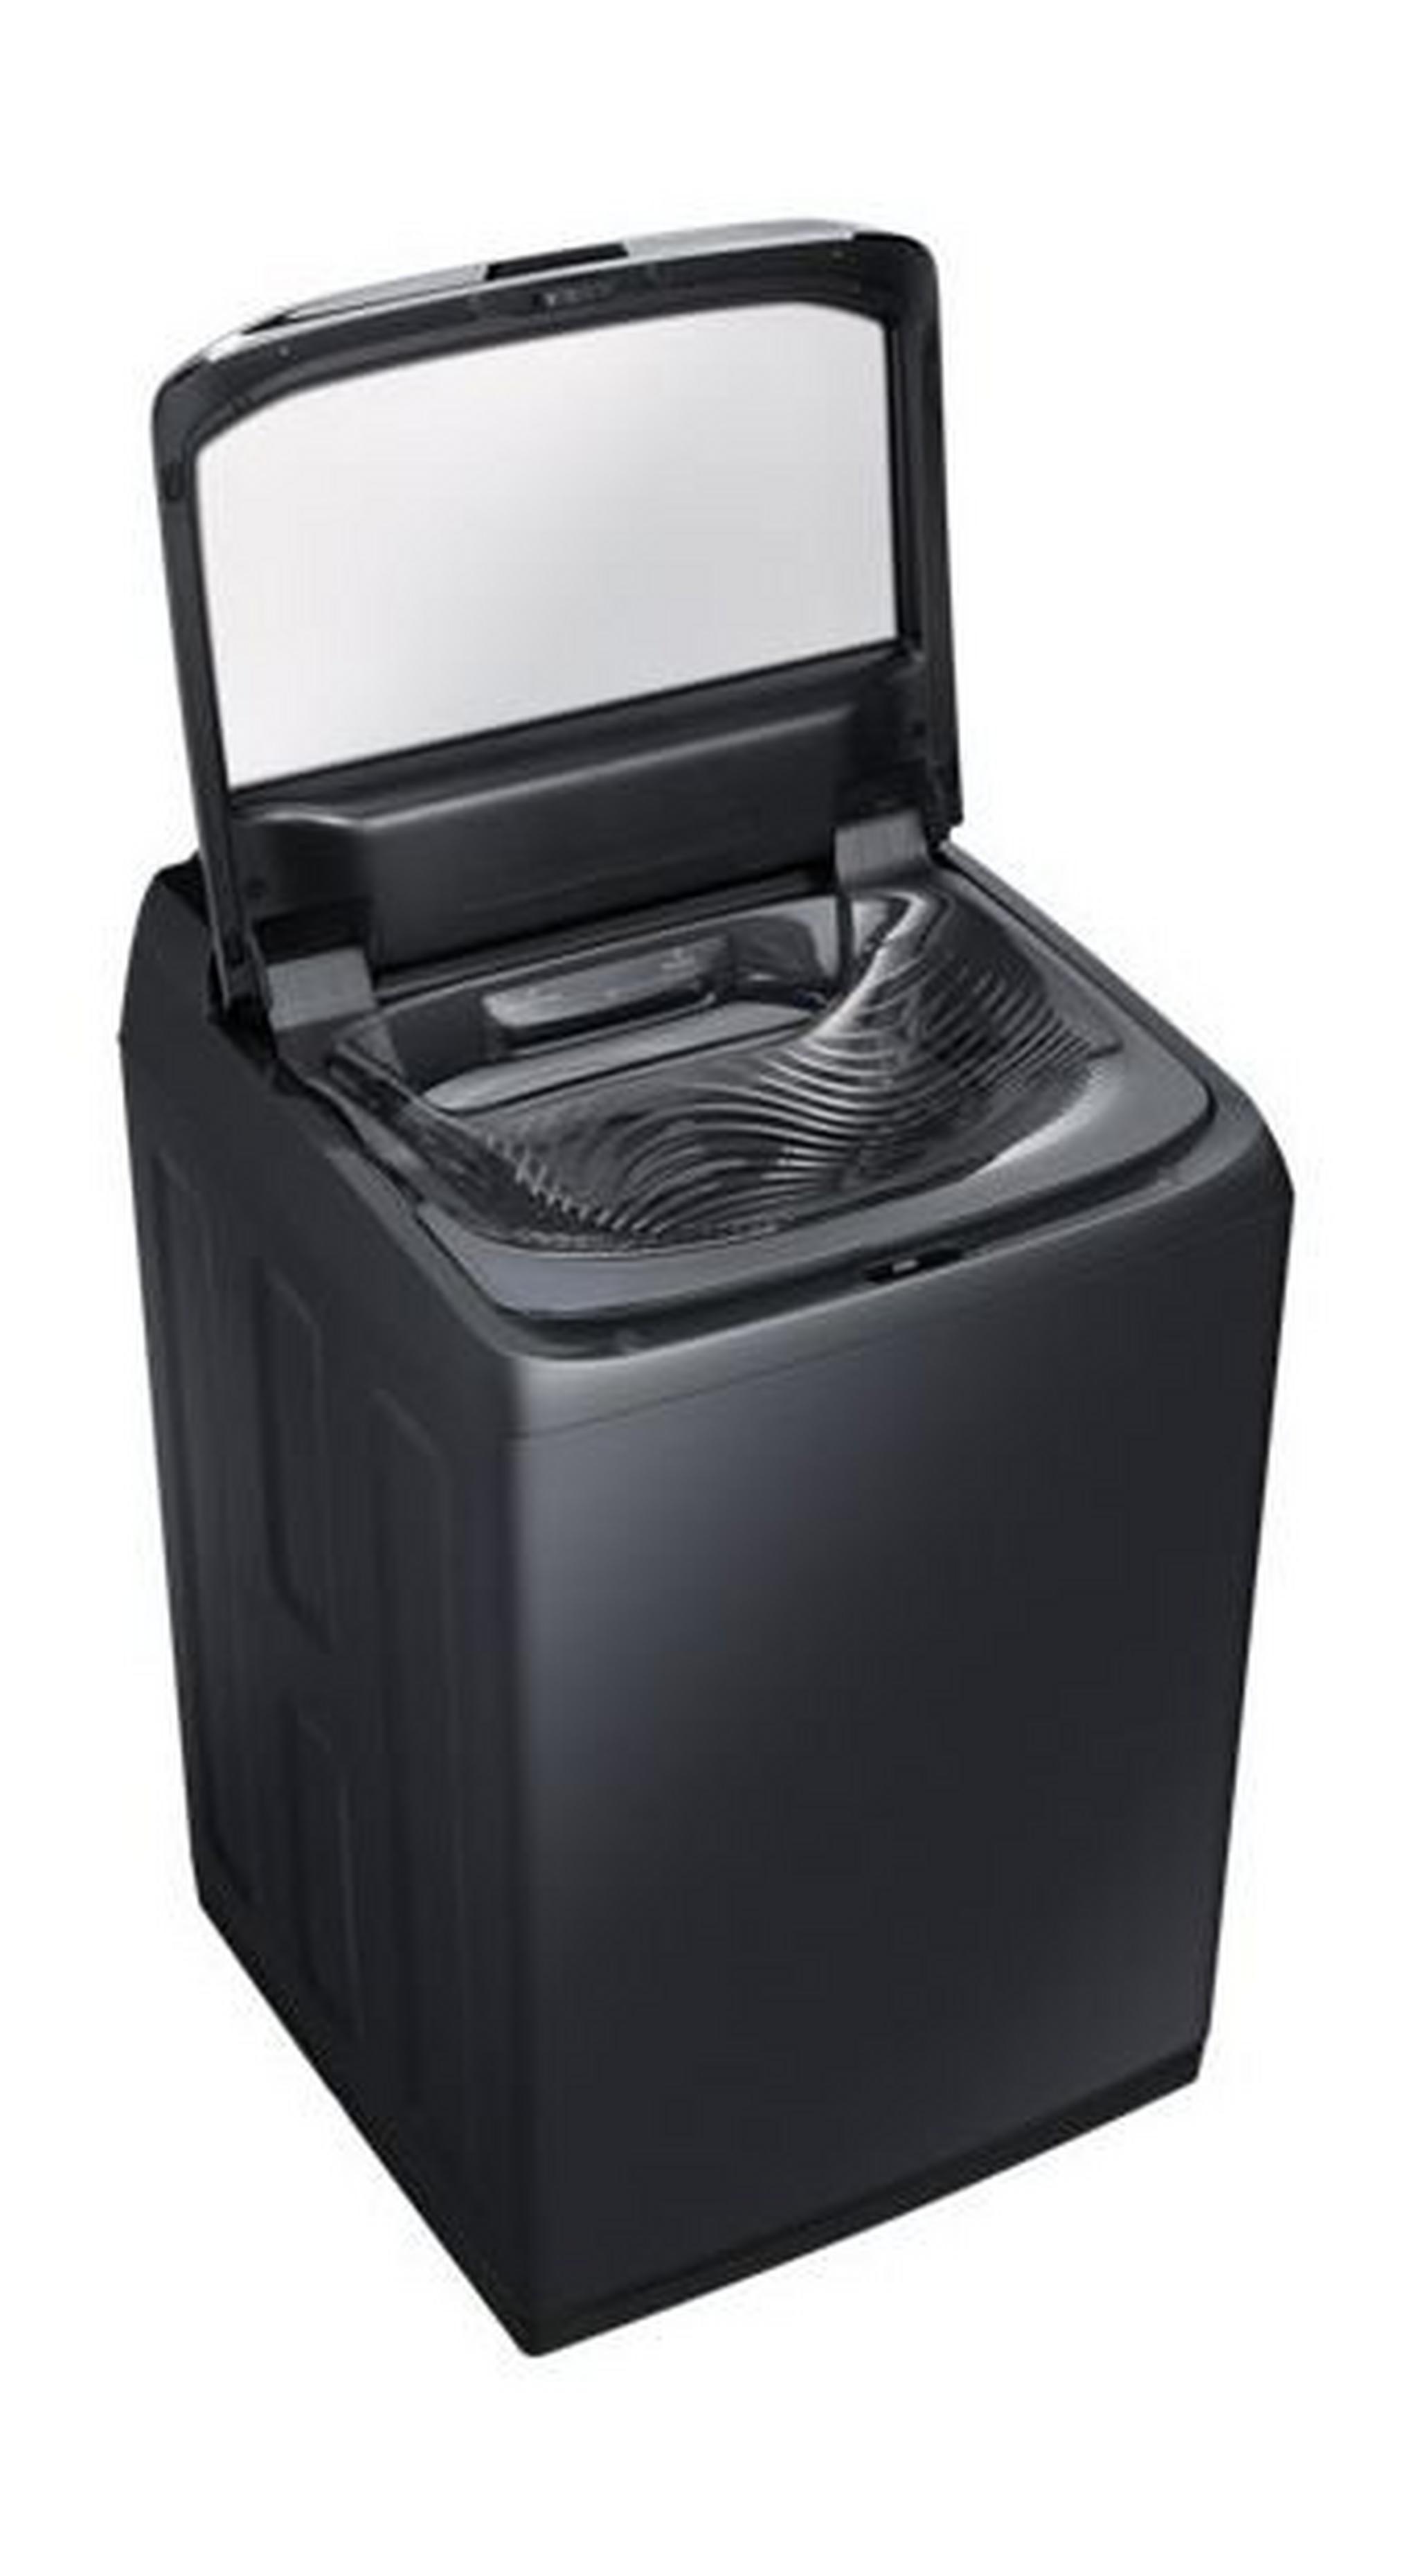 Samsung 22 kg Top Load Washing Machine (WA22M8700GV) - Silver